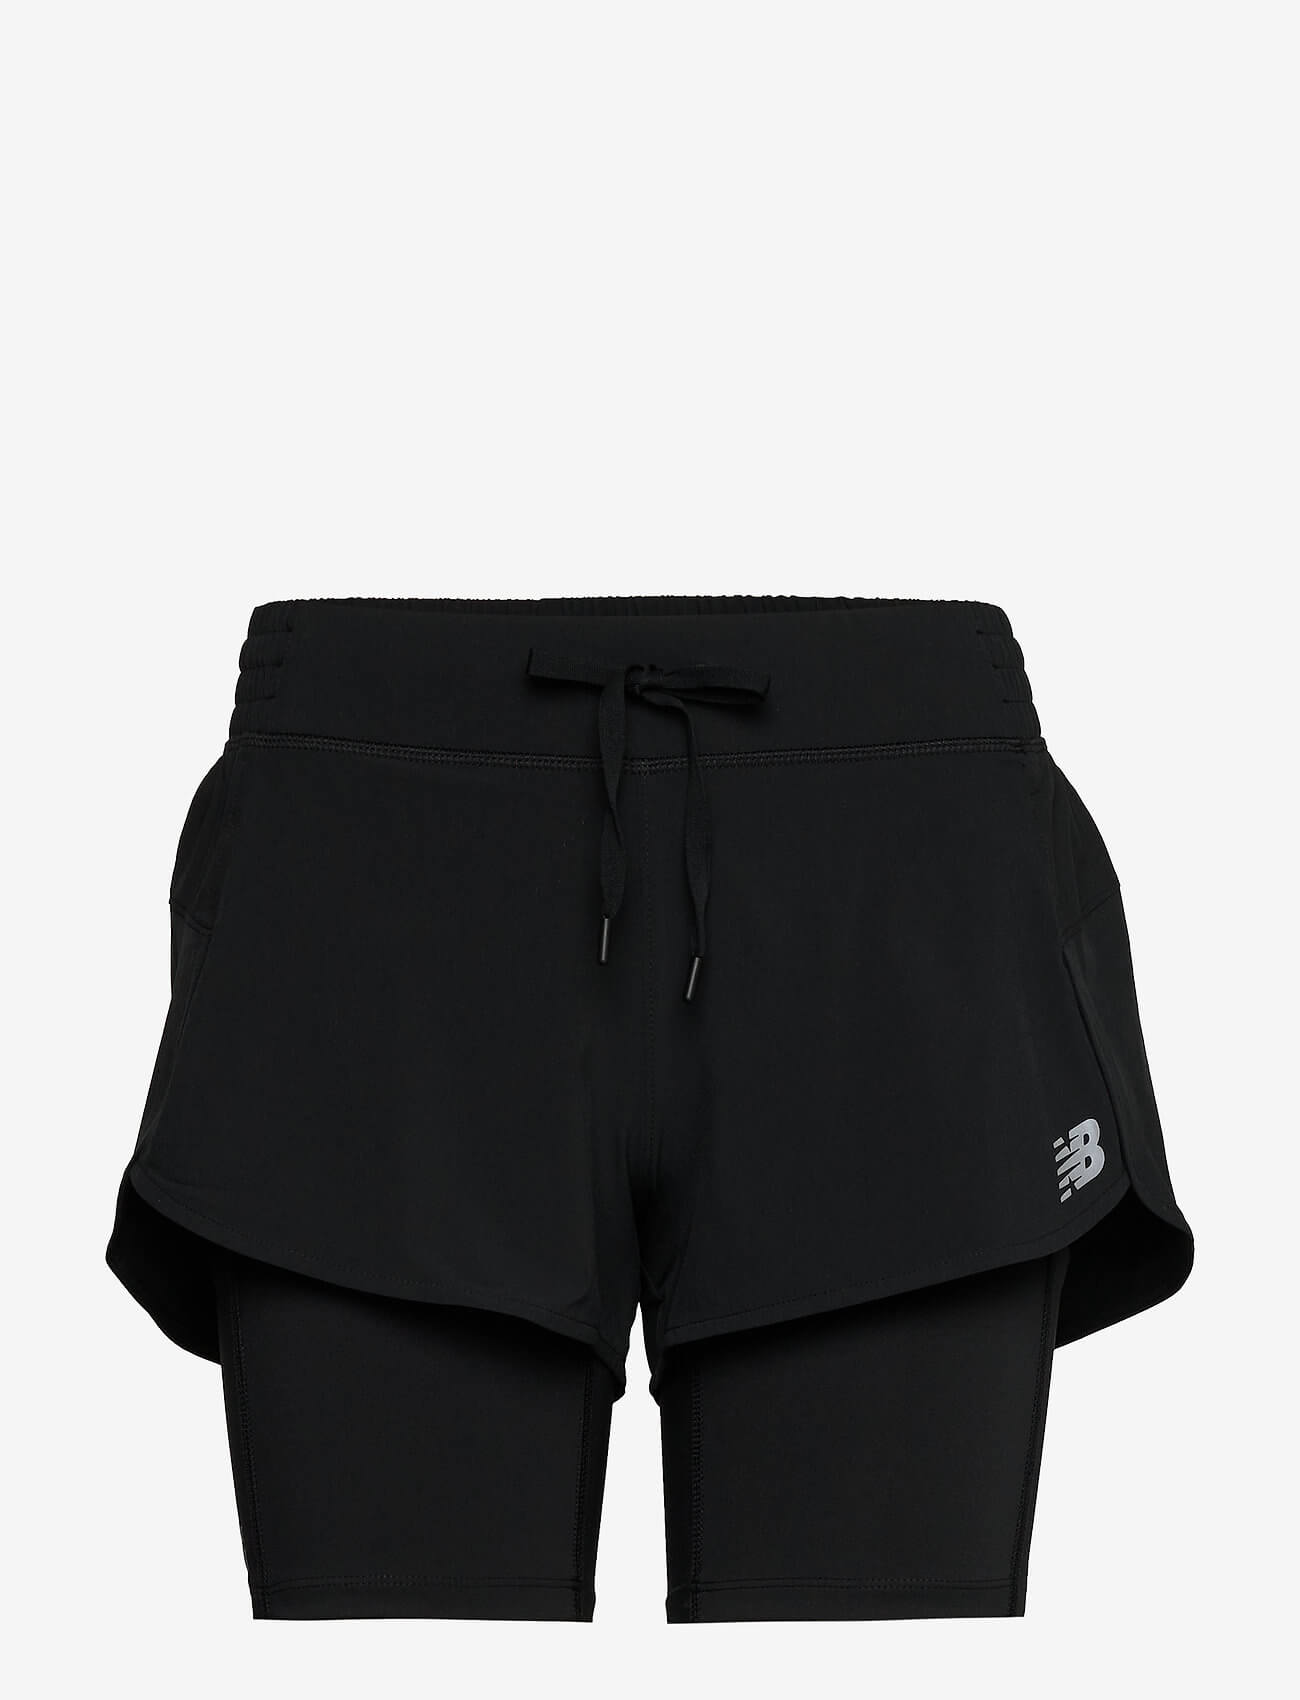 new balance black shorts